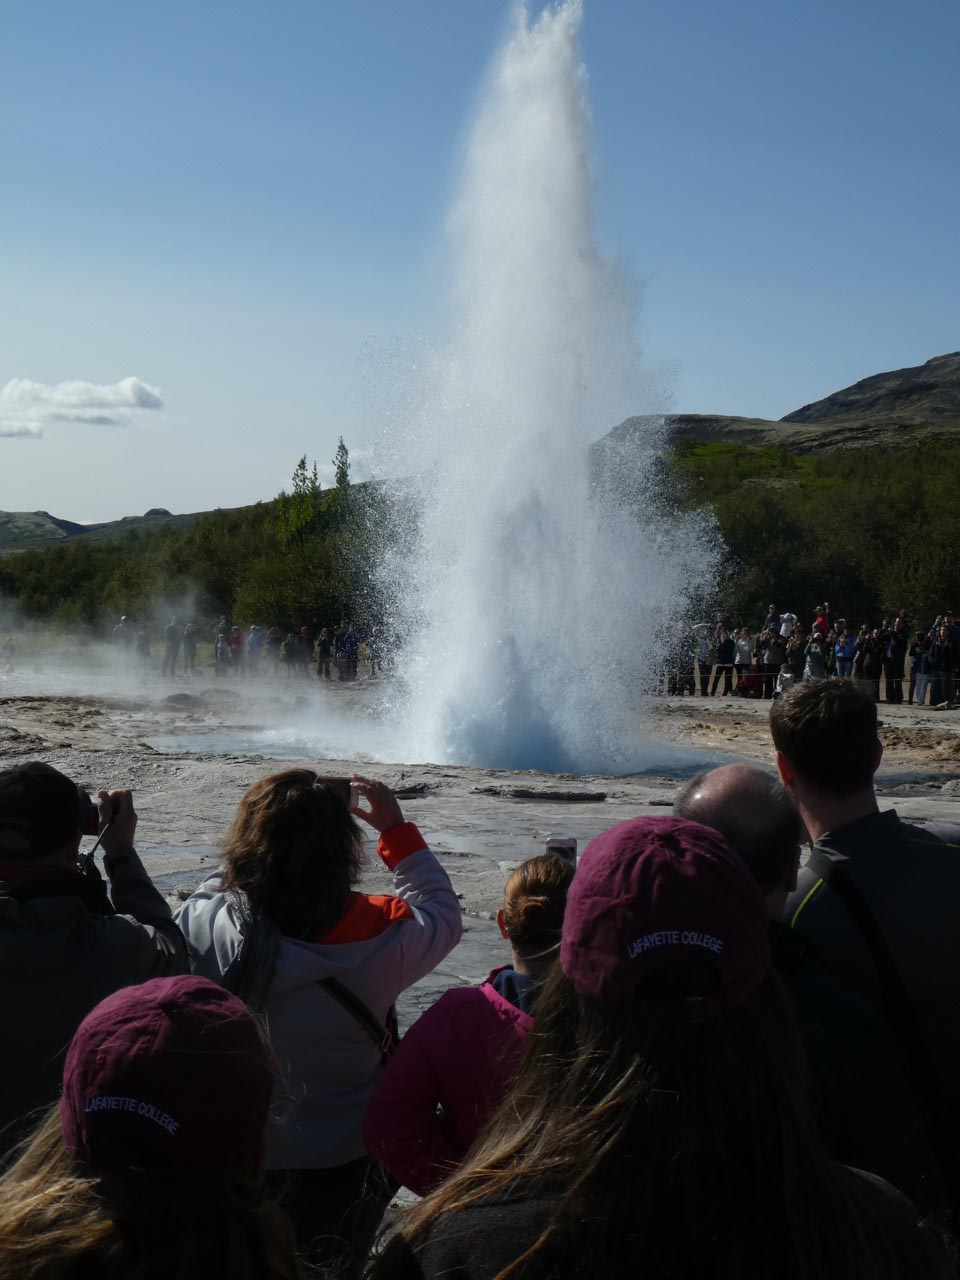 Students watching a geyser called Strokkur erupt water and steam in Iceland